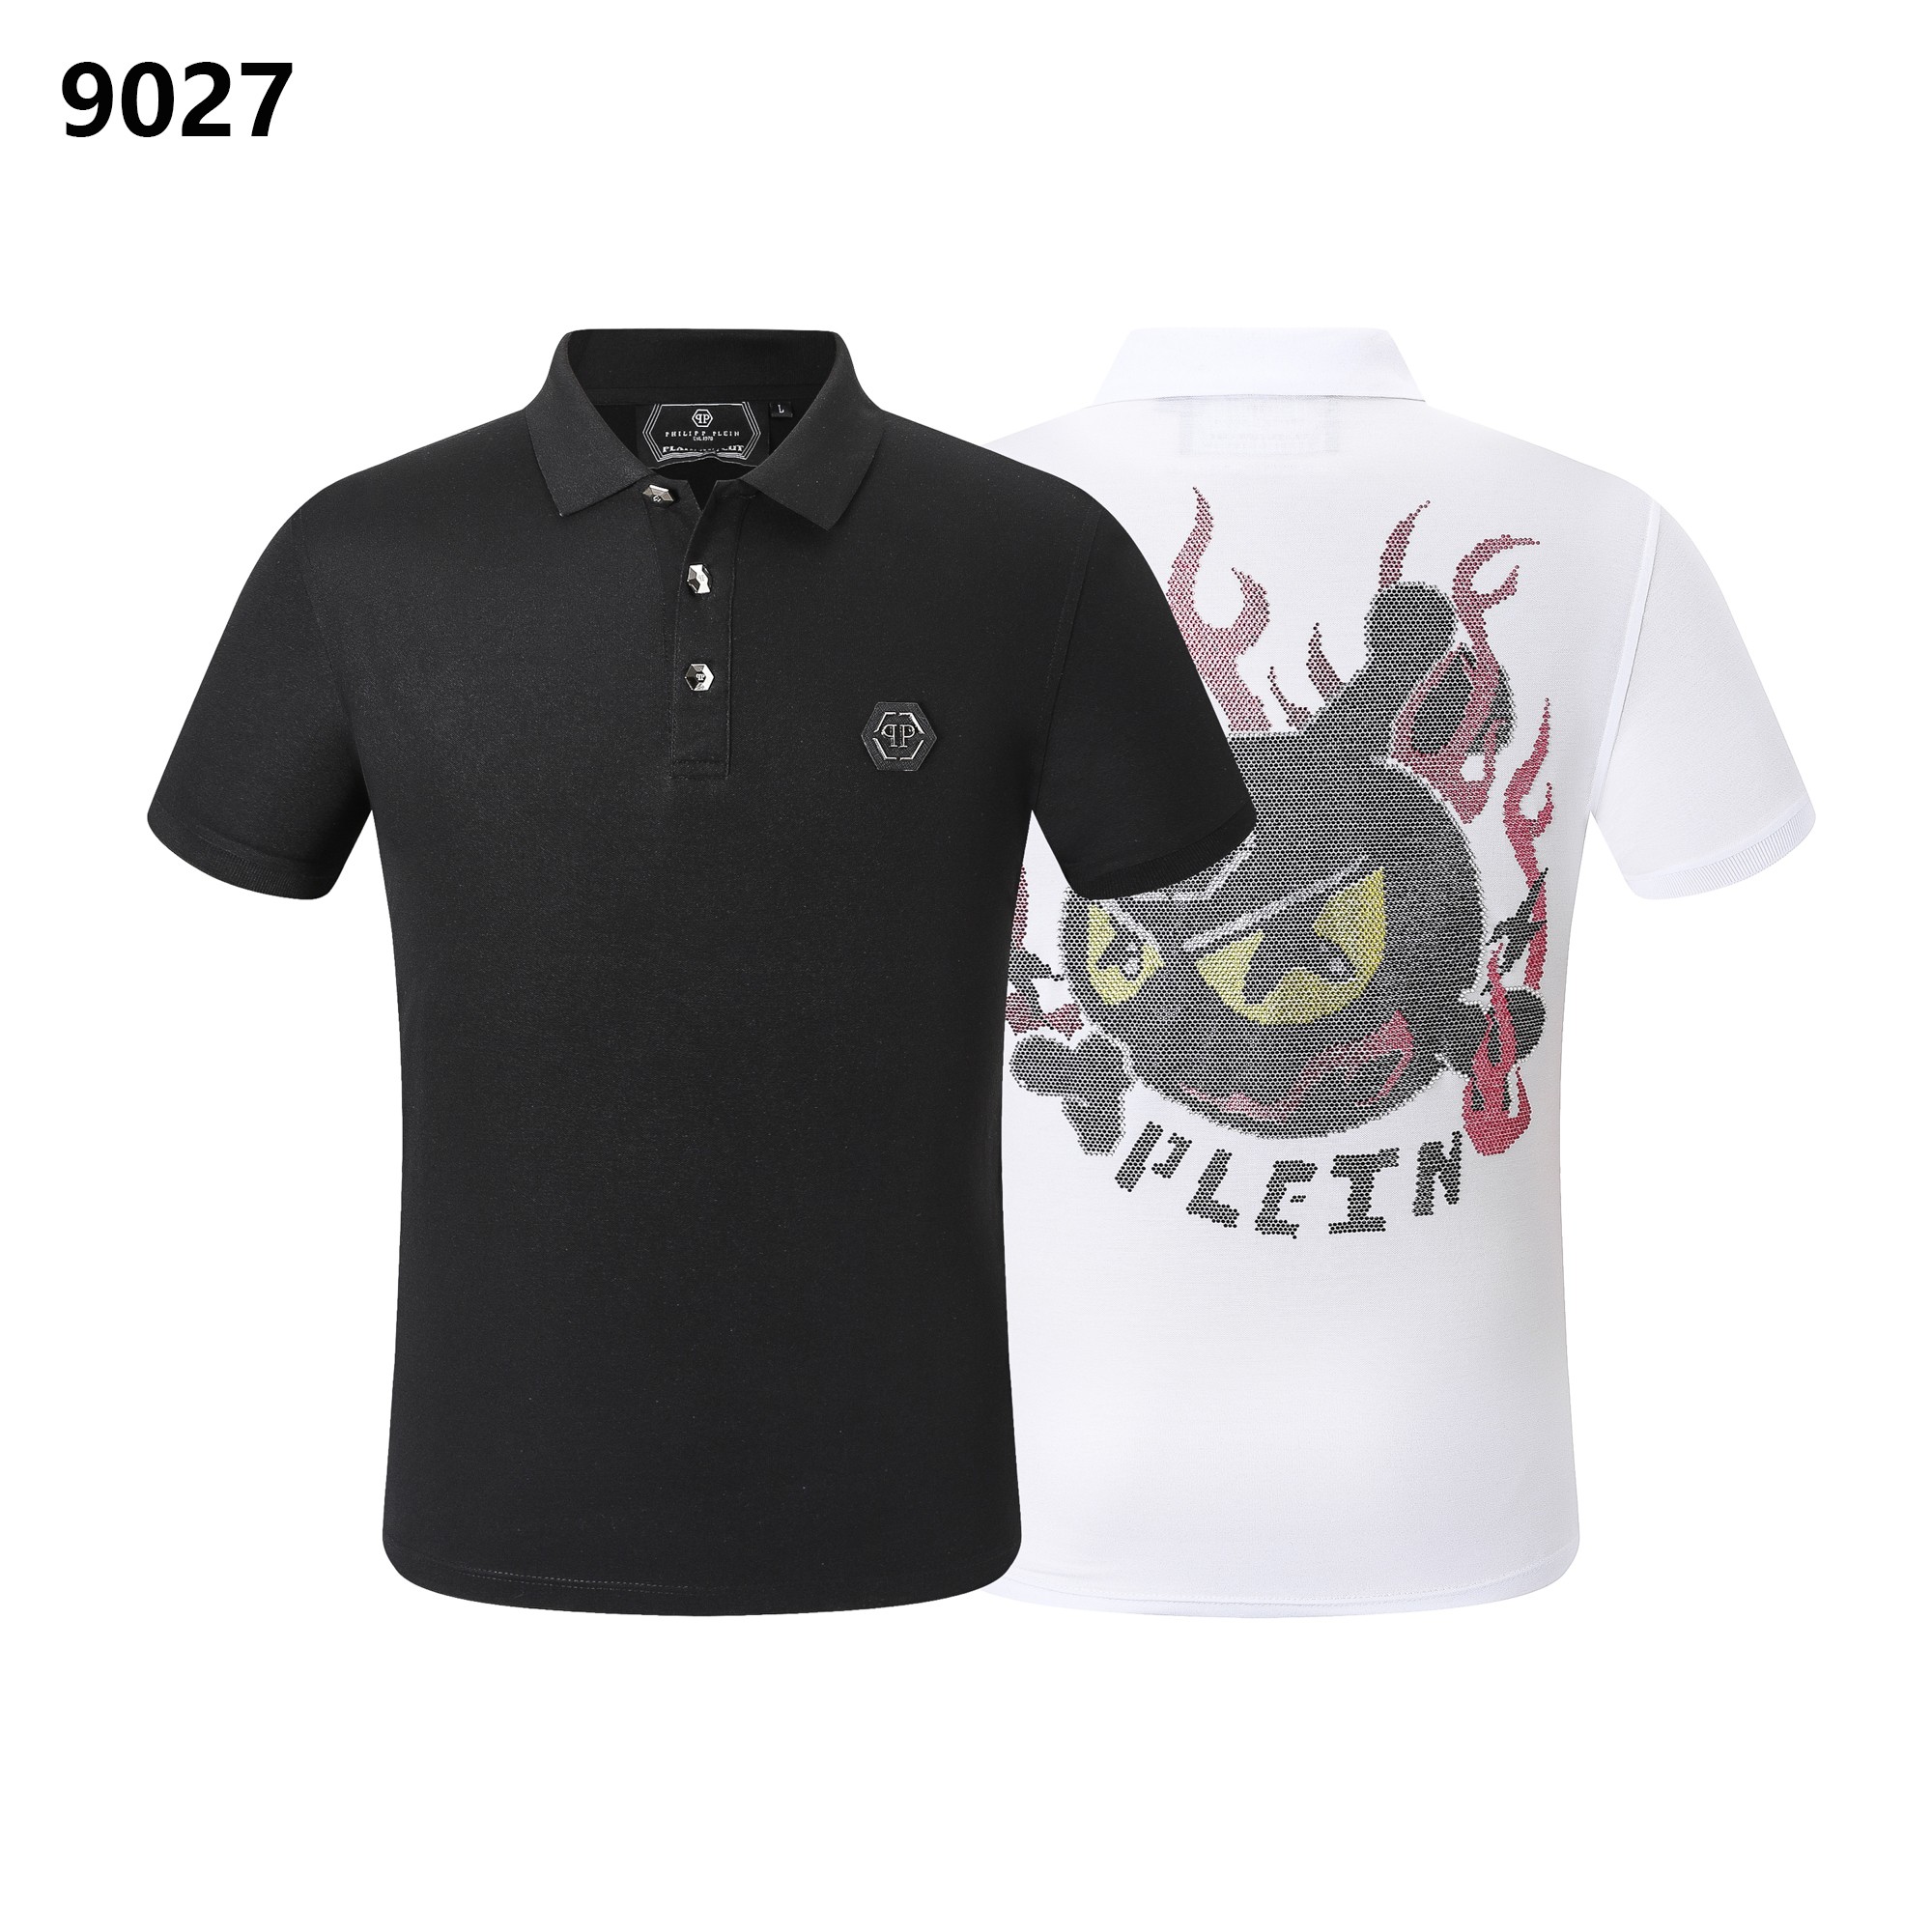 Philipp Plein Clothing Polo T-Shirt Black White Men Spring/Summer Collection Short Sleeve